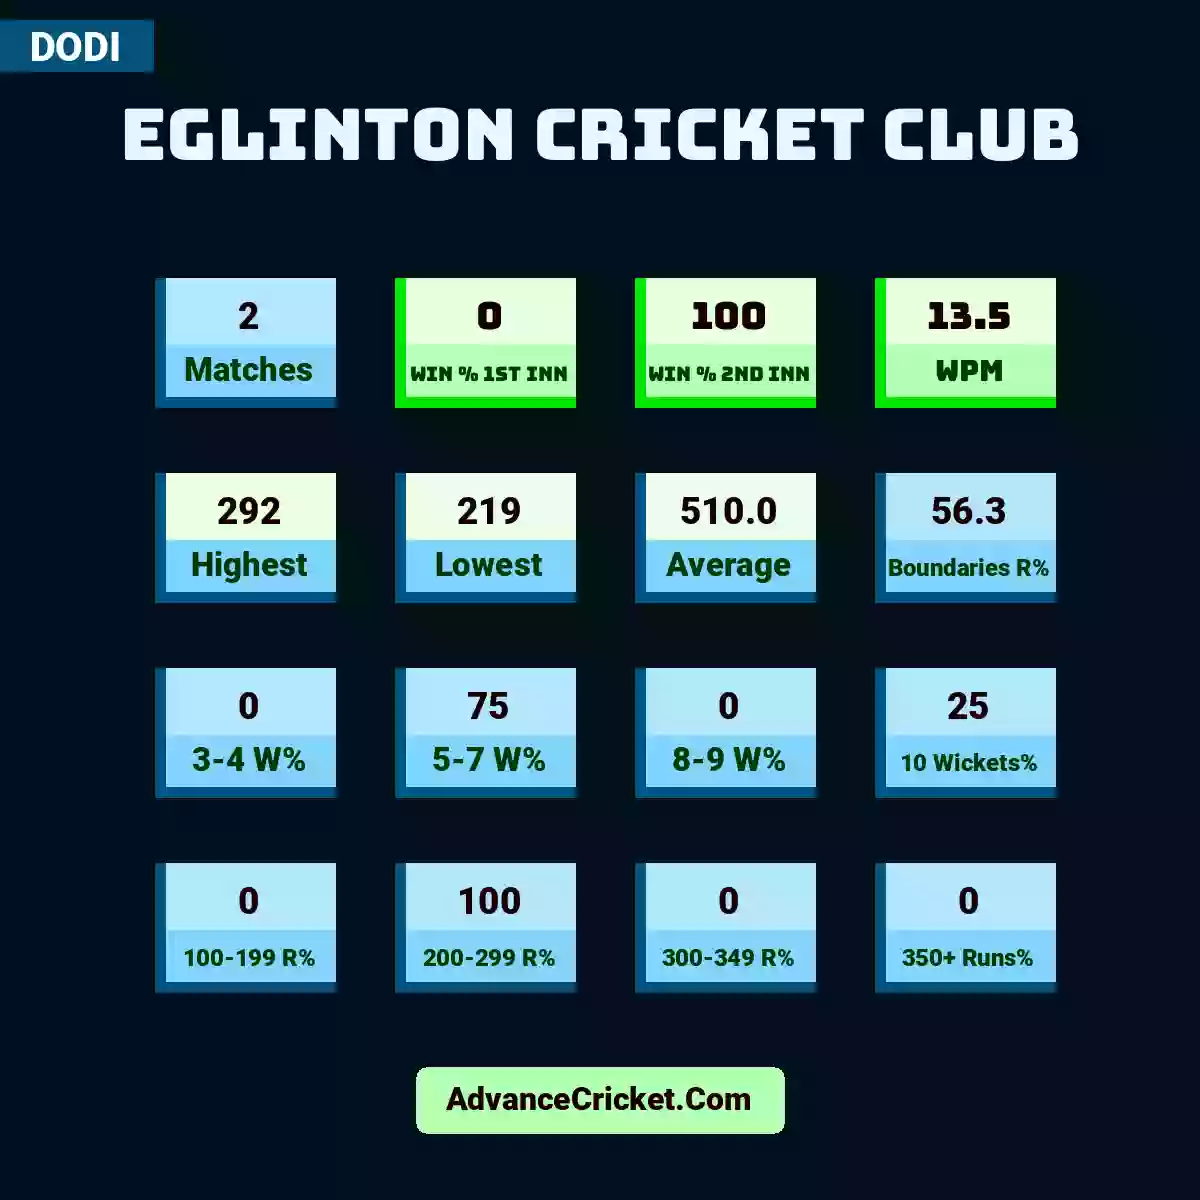 Image showing Eglinton Cricket Club with Matches: 2, Win % 1st Inn: 0, Win % 2nd Inn: 100, WPM: 13.5, Highest: 292, Lowest: 219, Average: 510.0, Boundaries R%: 56.3, 3-4 W%: 0, 5-7 W%: 75, 8-9 W%: 0, 10 Wickets%: 25, 100-199 R%: 0, 200-299 R%: 100, 300-349 R%: 0, 350+ Runs%: 0.